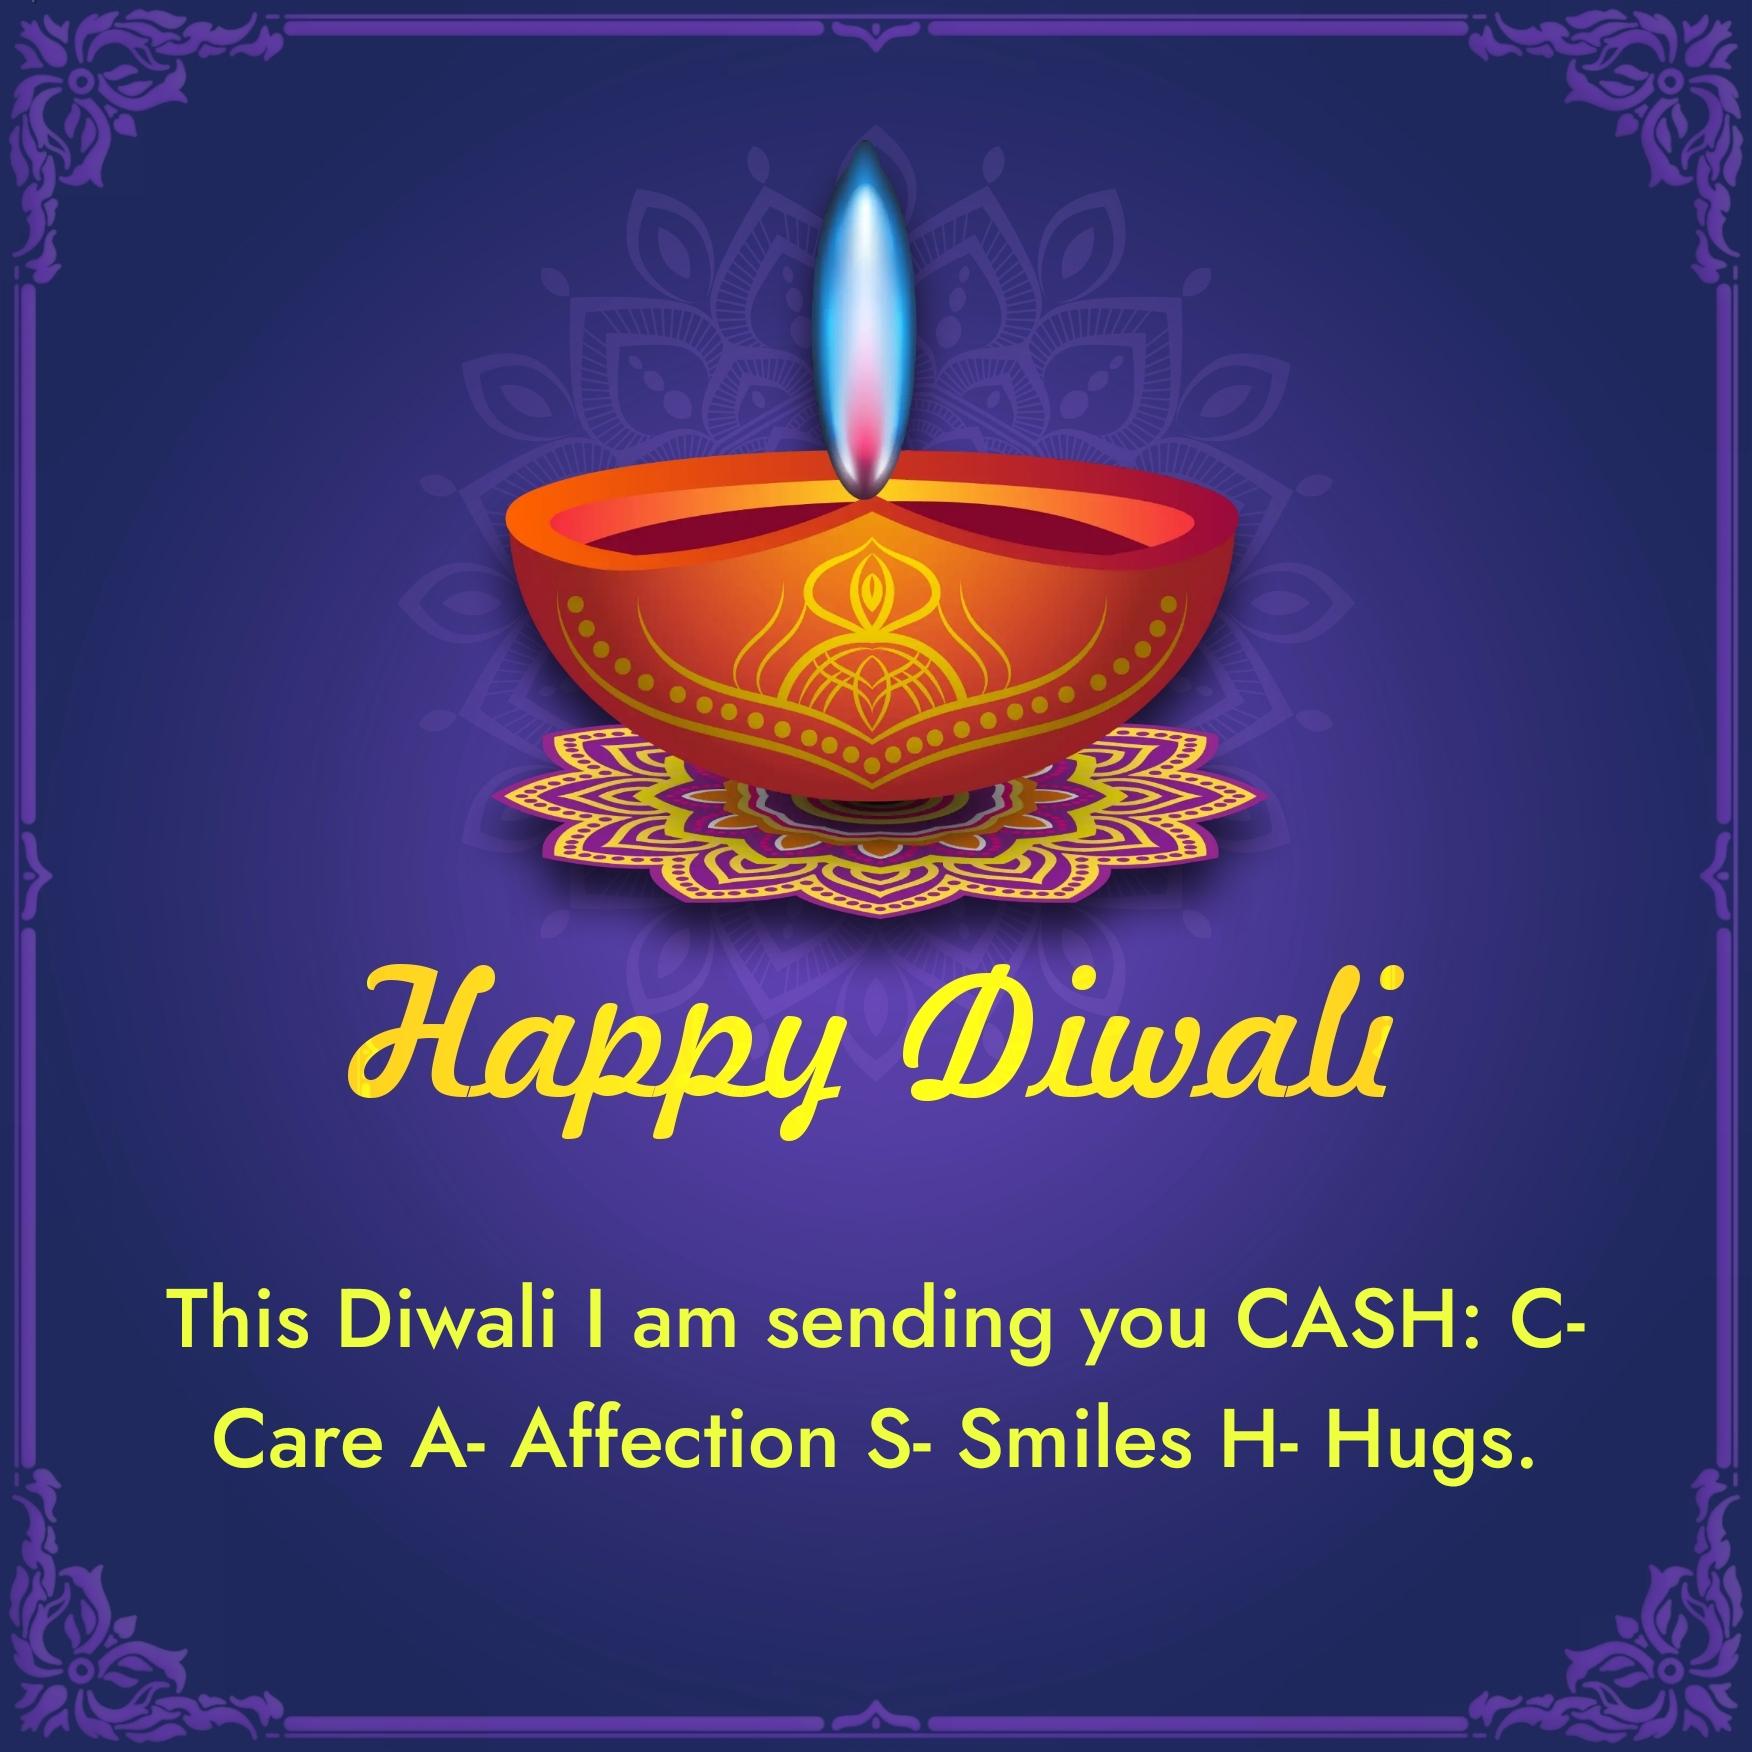 This Diwali I am sending you CASH